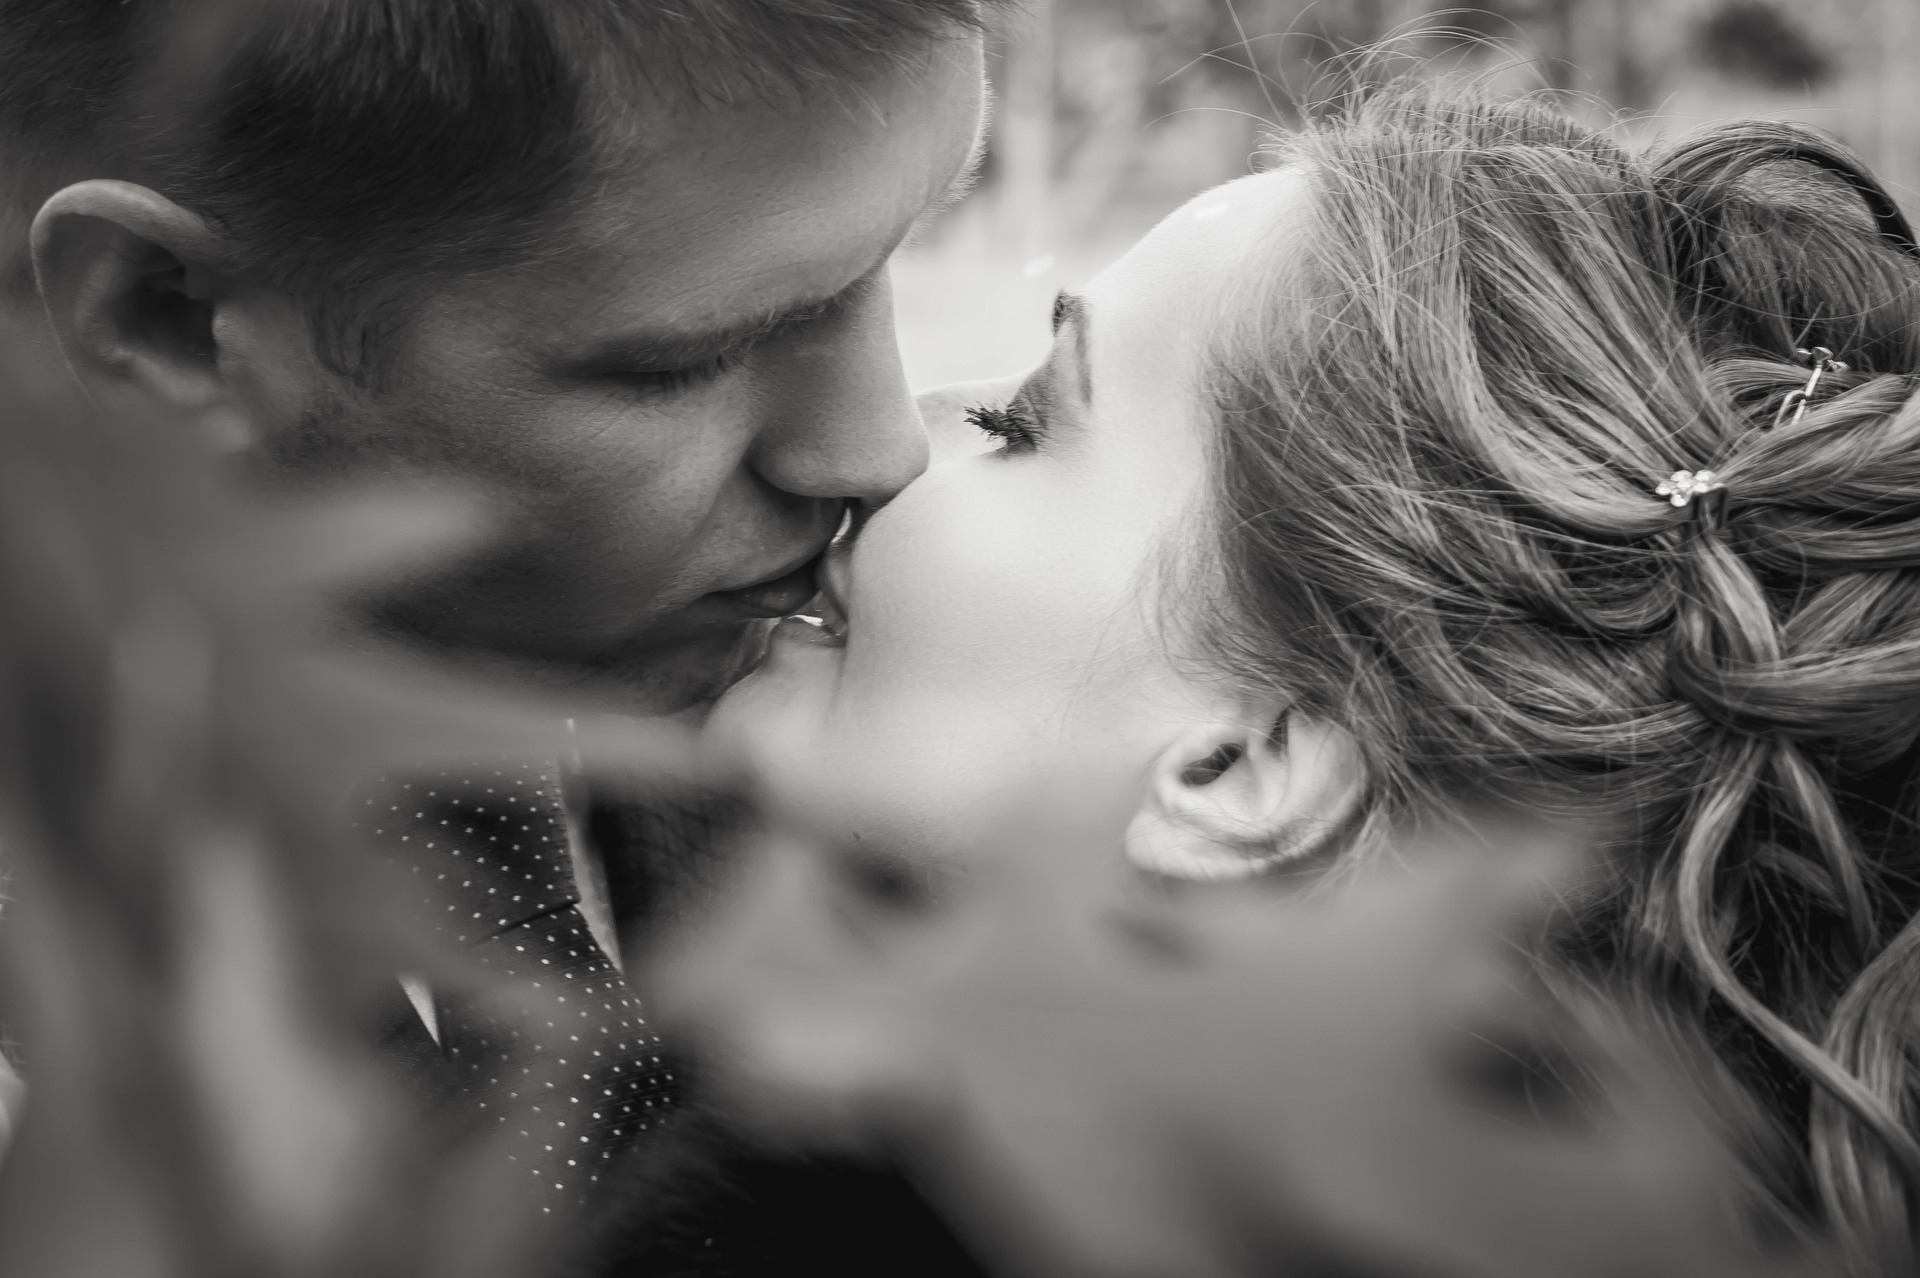 Поцелуй нежности любви. Нежный поцелуй. Нежный поцелуй фото. Красивый поцелуй. Нежный поцелуй влюбленных.